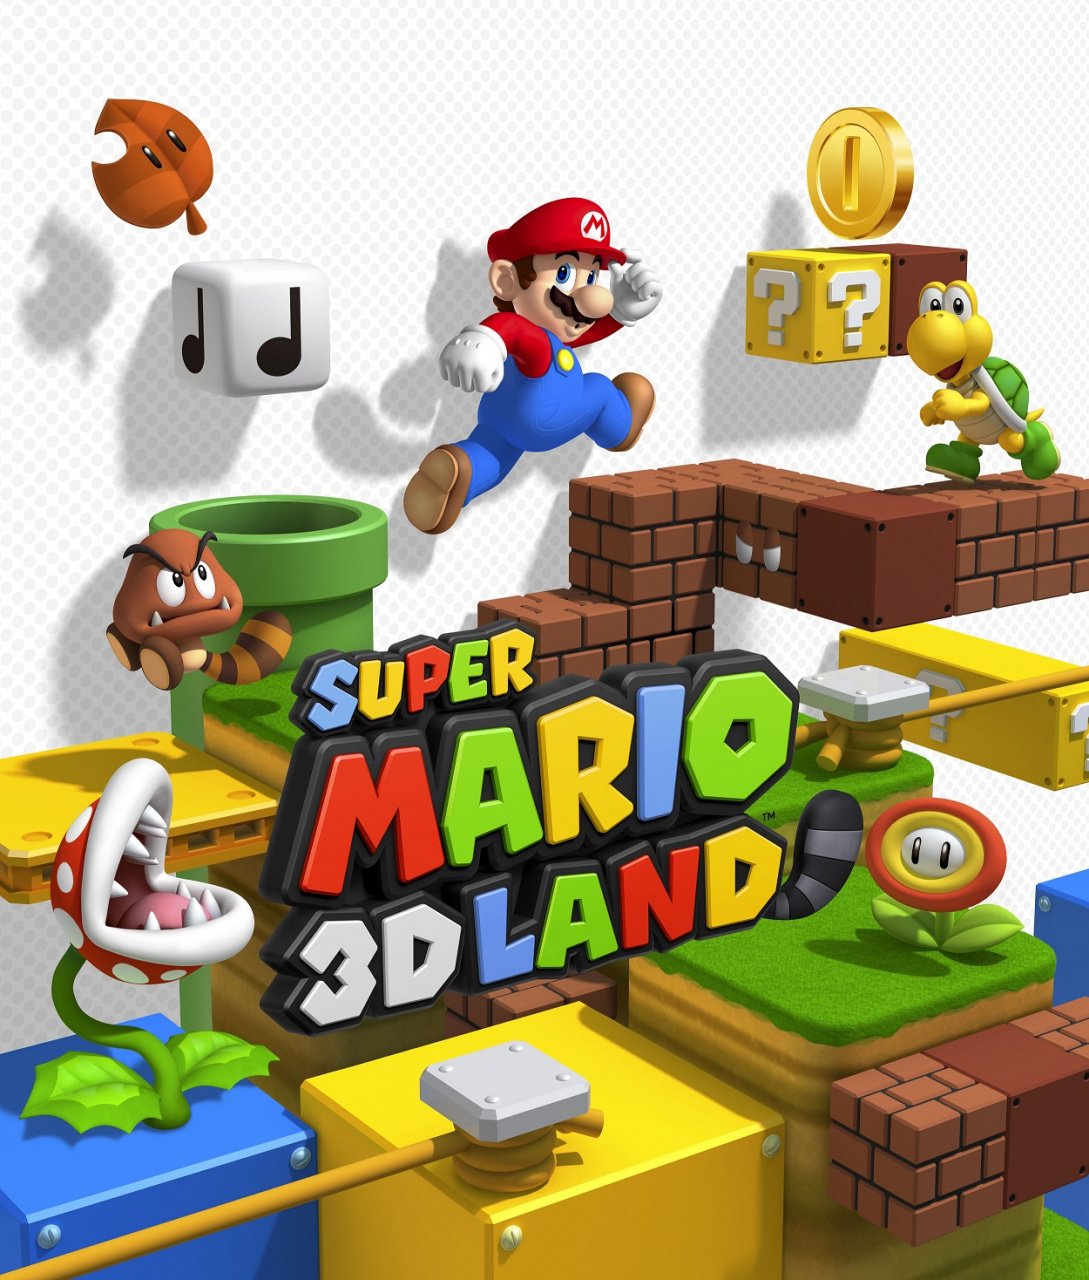 HQ Super Mario 3D Land Wallpapers | File 226.28Kb